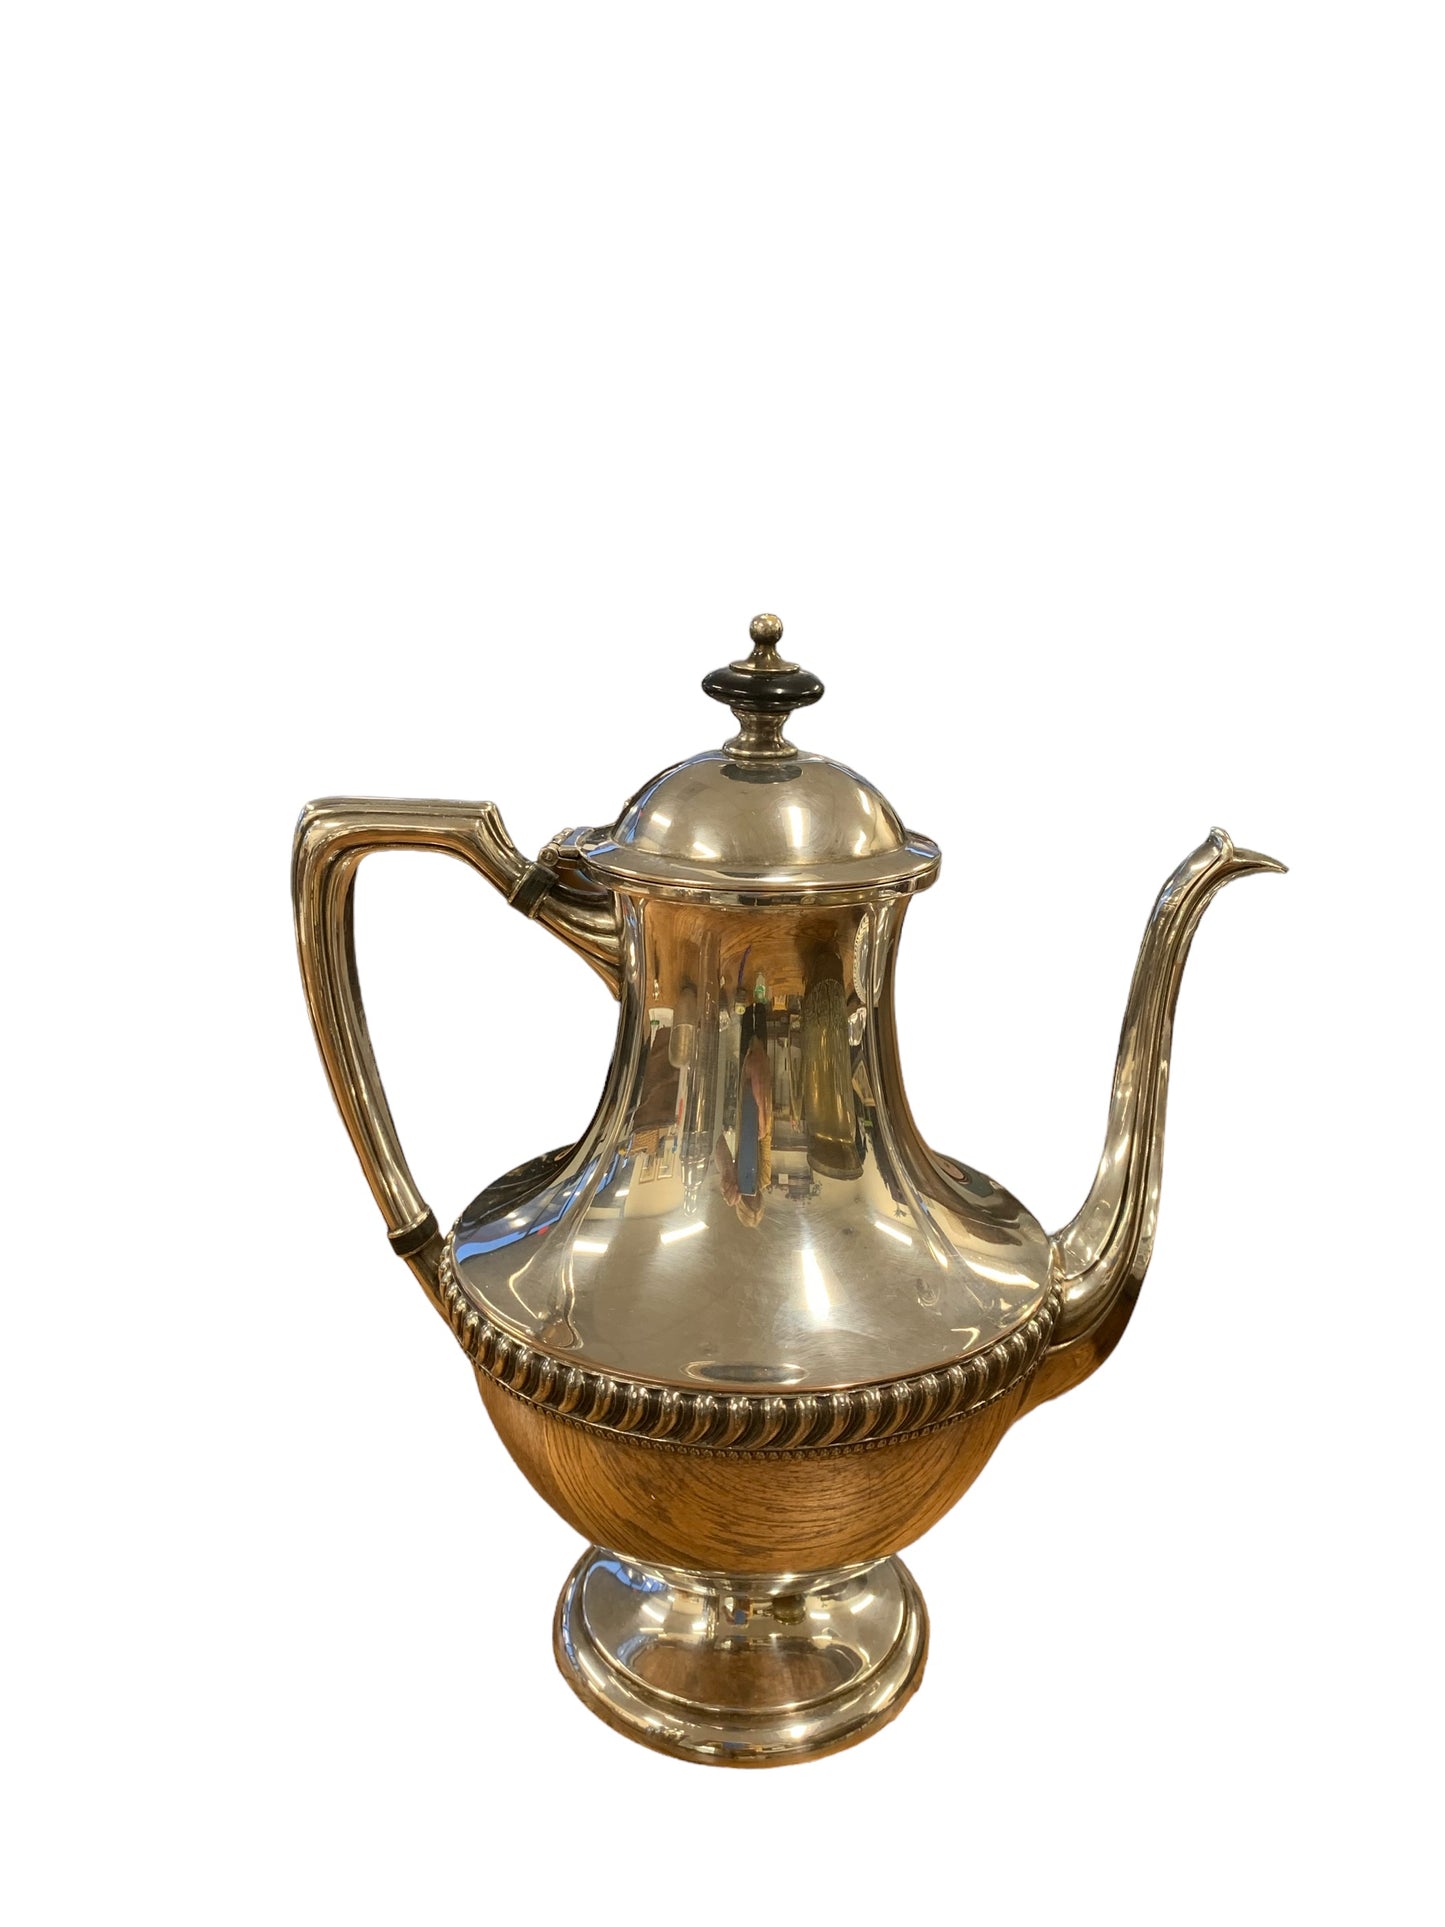 Sheffield-style silverplate teapot, 10.5" h